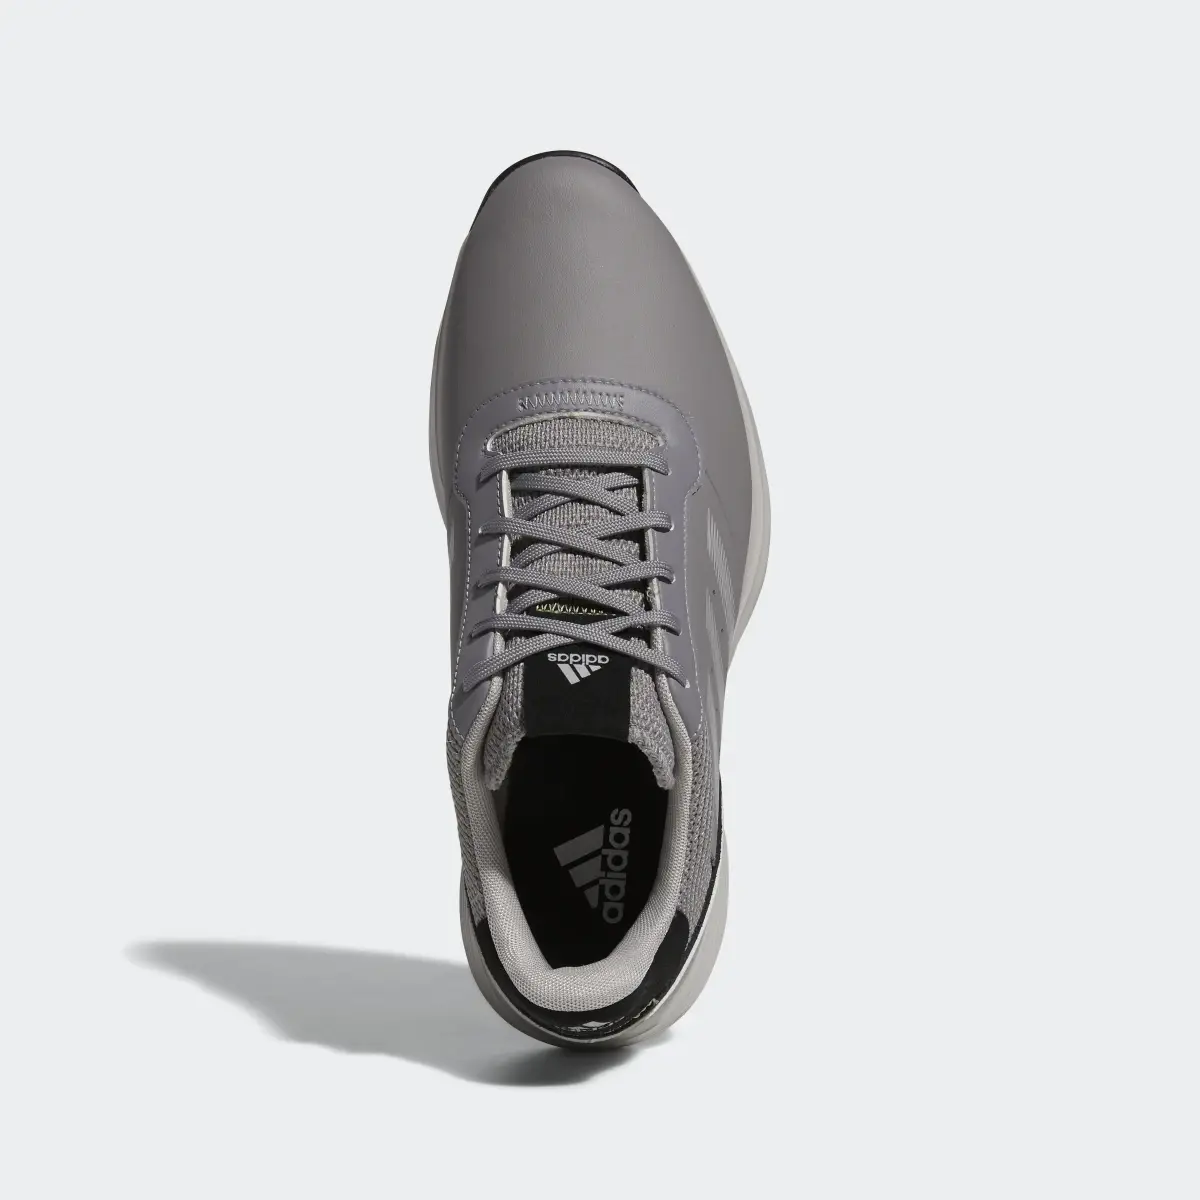 Adidas Chaussure de golf S2G sans crampons Leather. 3